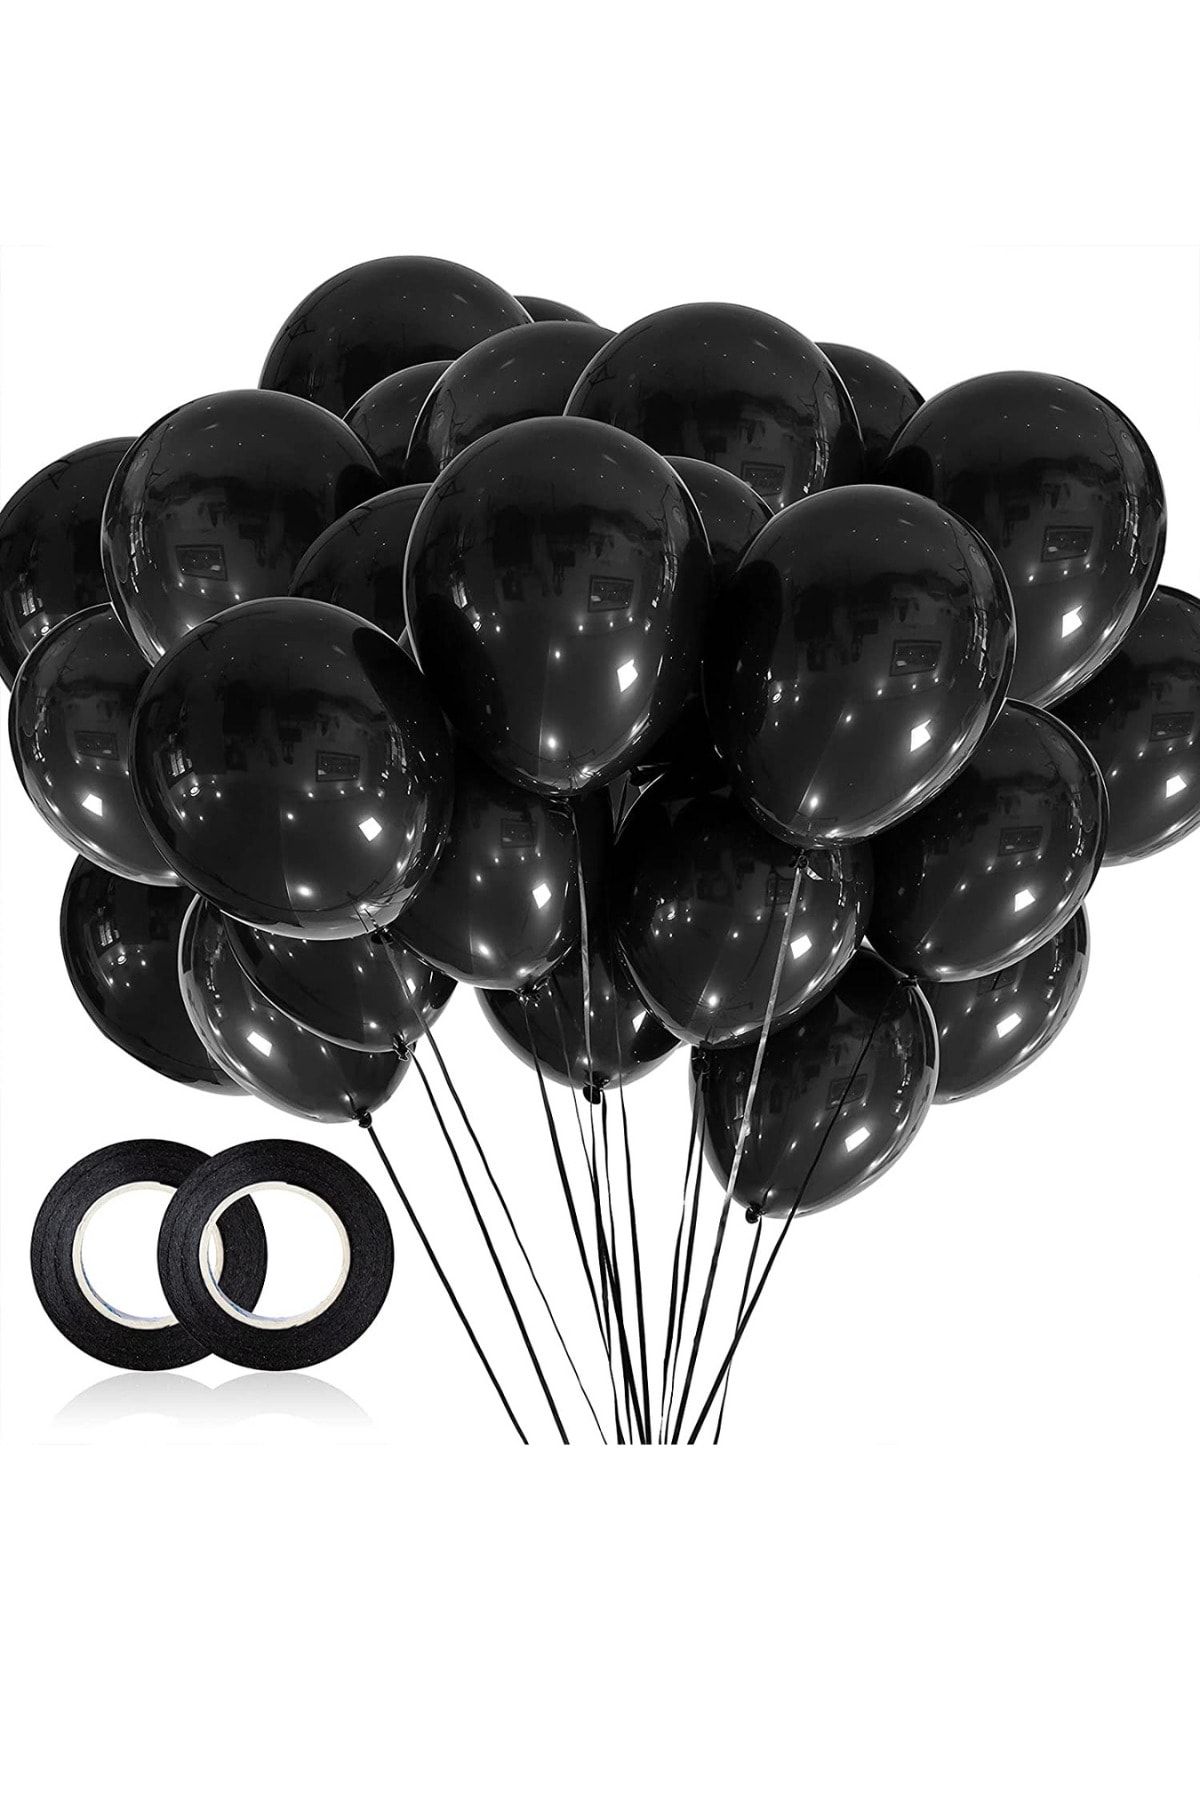 ELGALA Balon Parlak Siyah Helyum Balon 10 Adet Siyah Renk